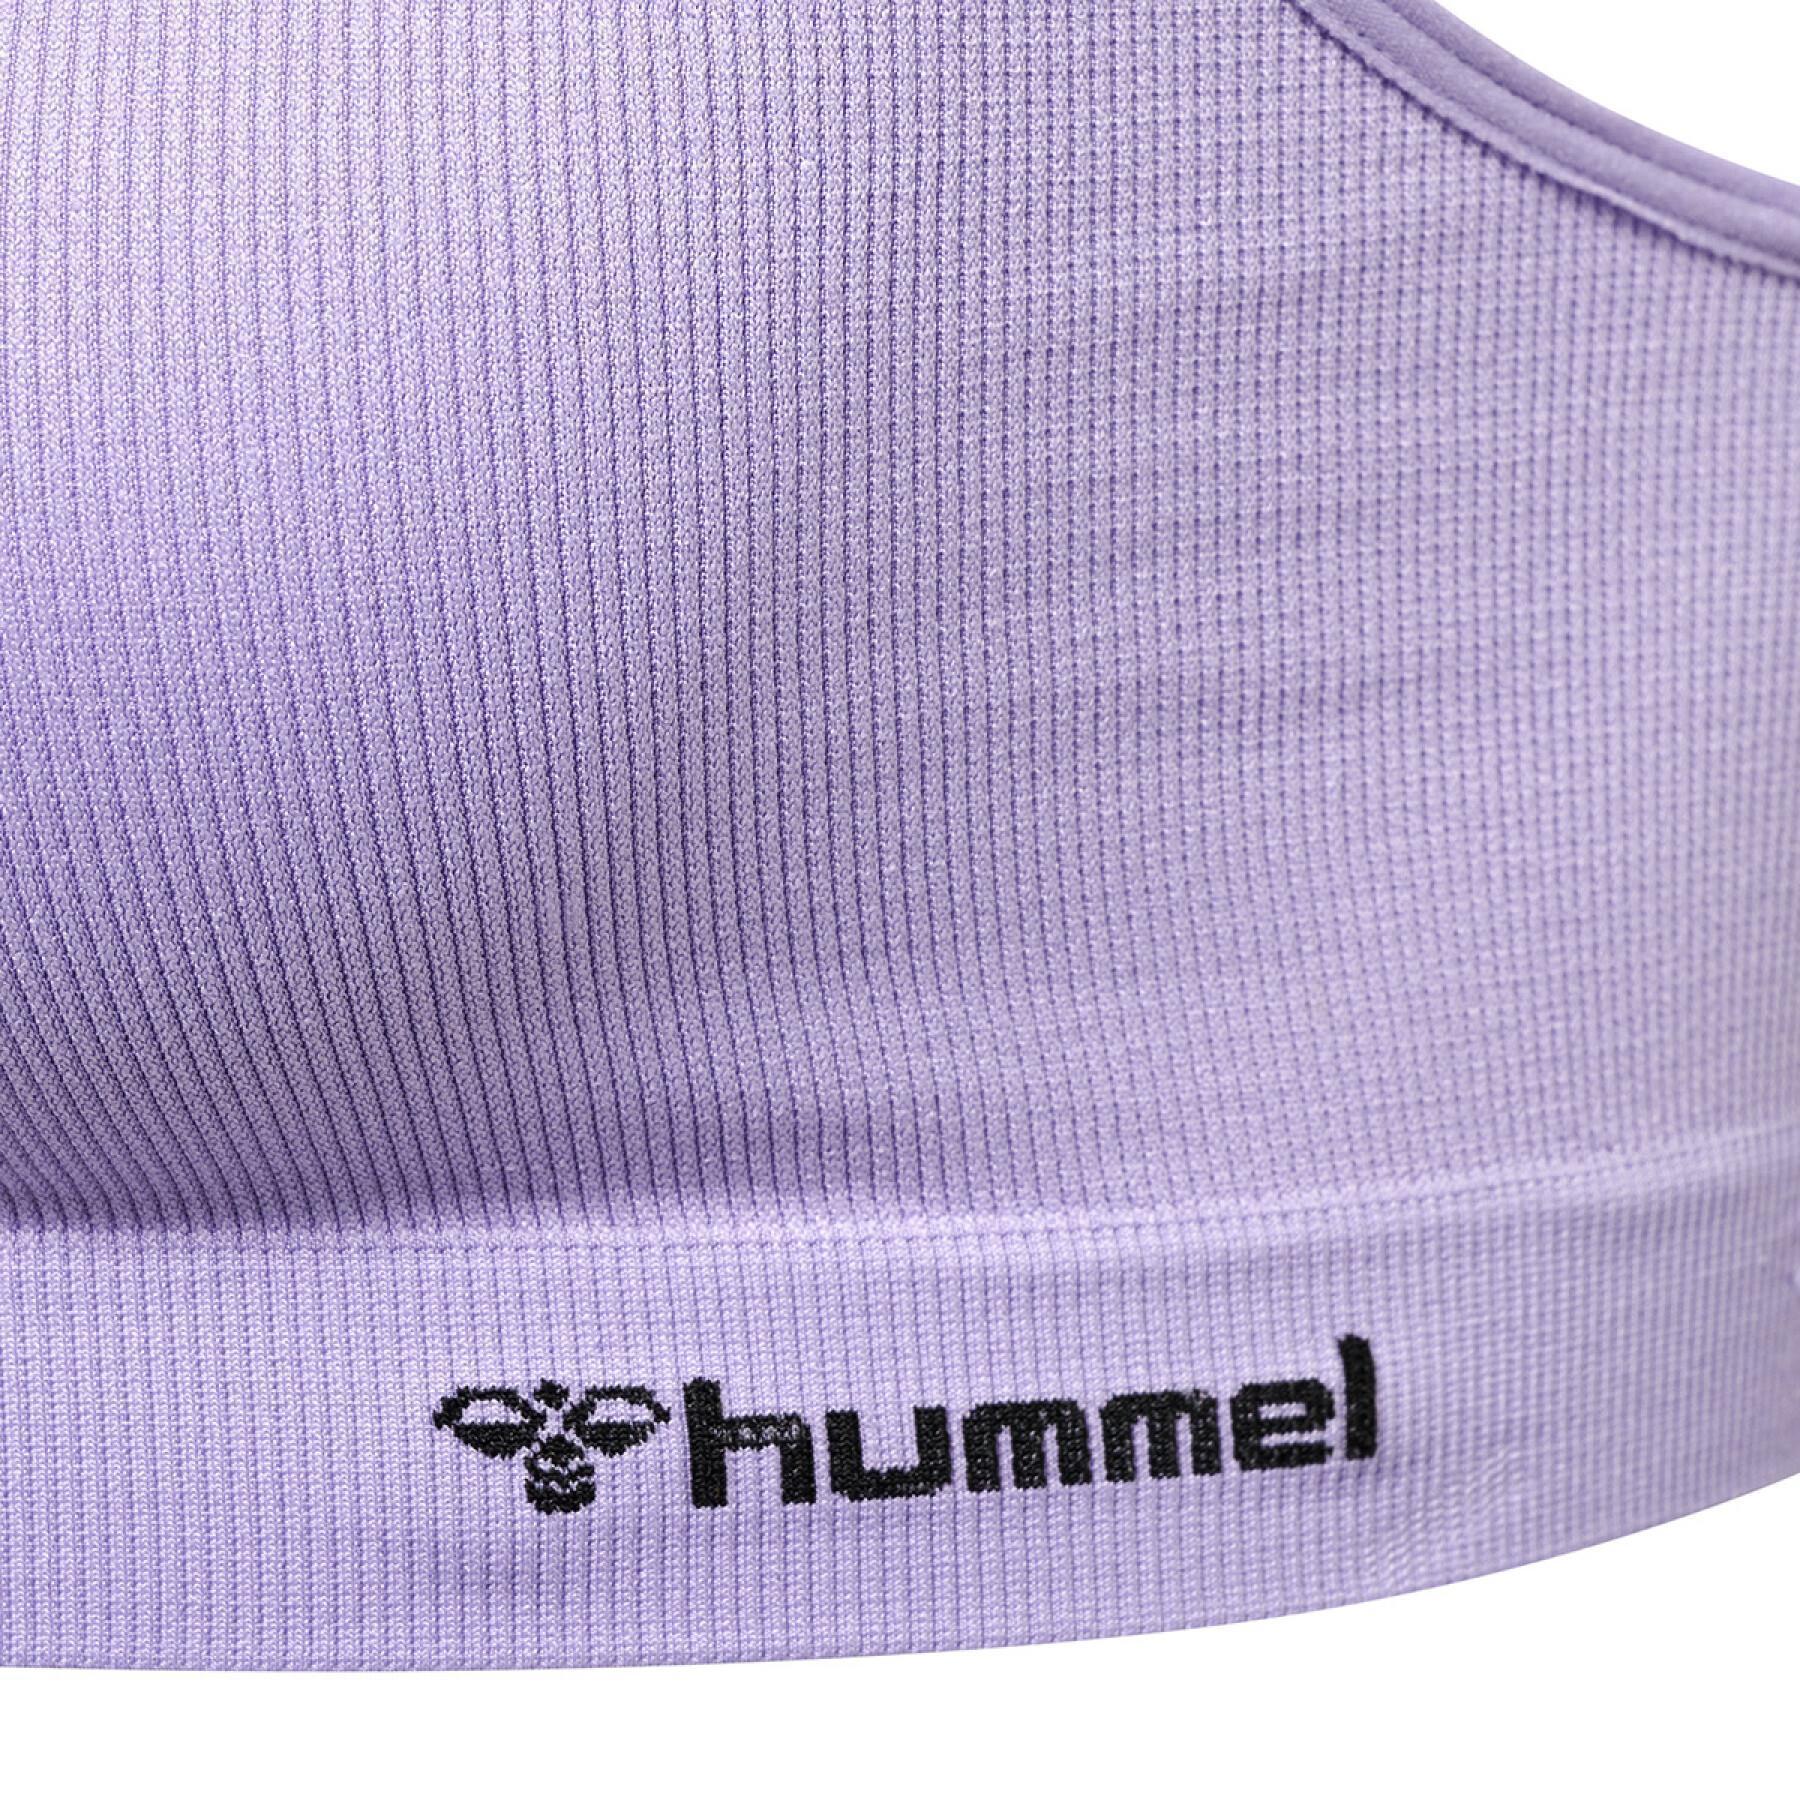 Women's bra Hummel hmlJuno